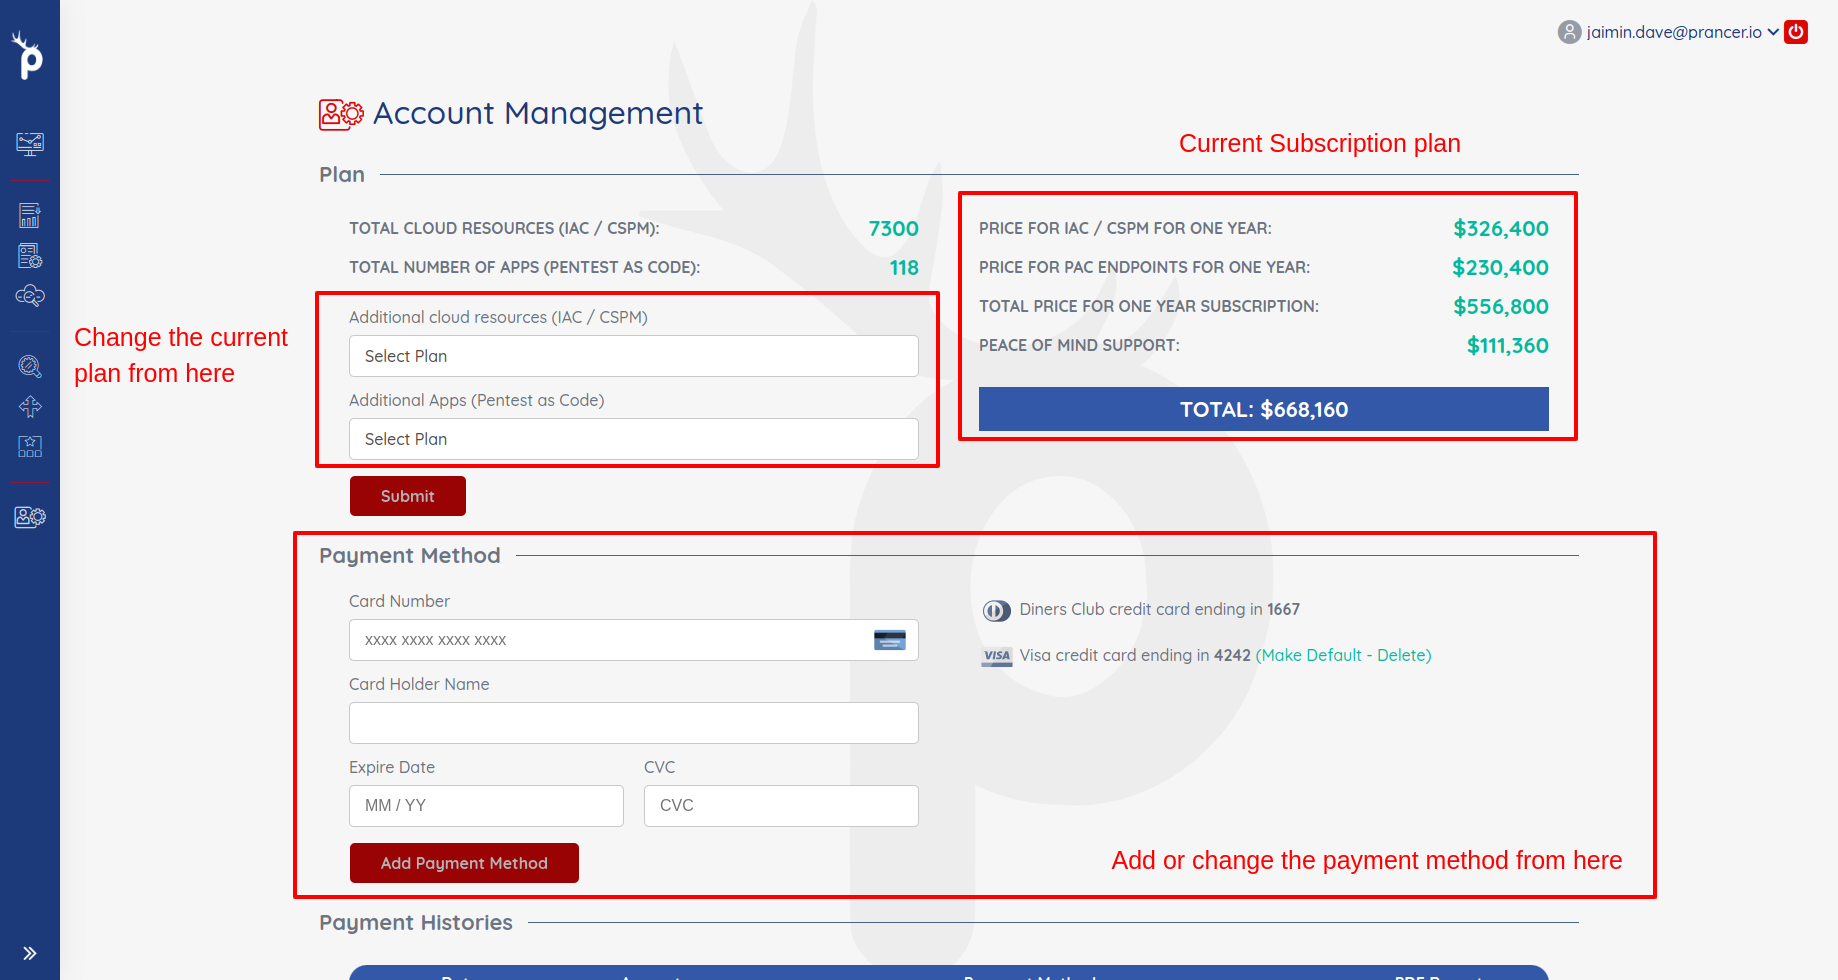 img/account_management/account_management_plan.png) 